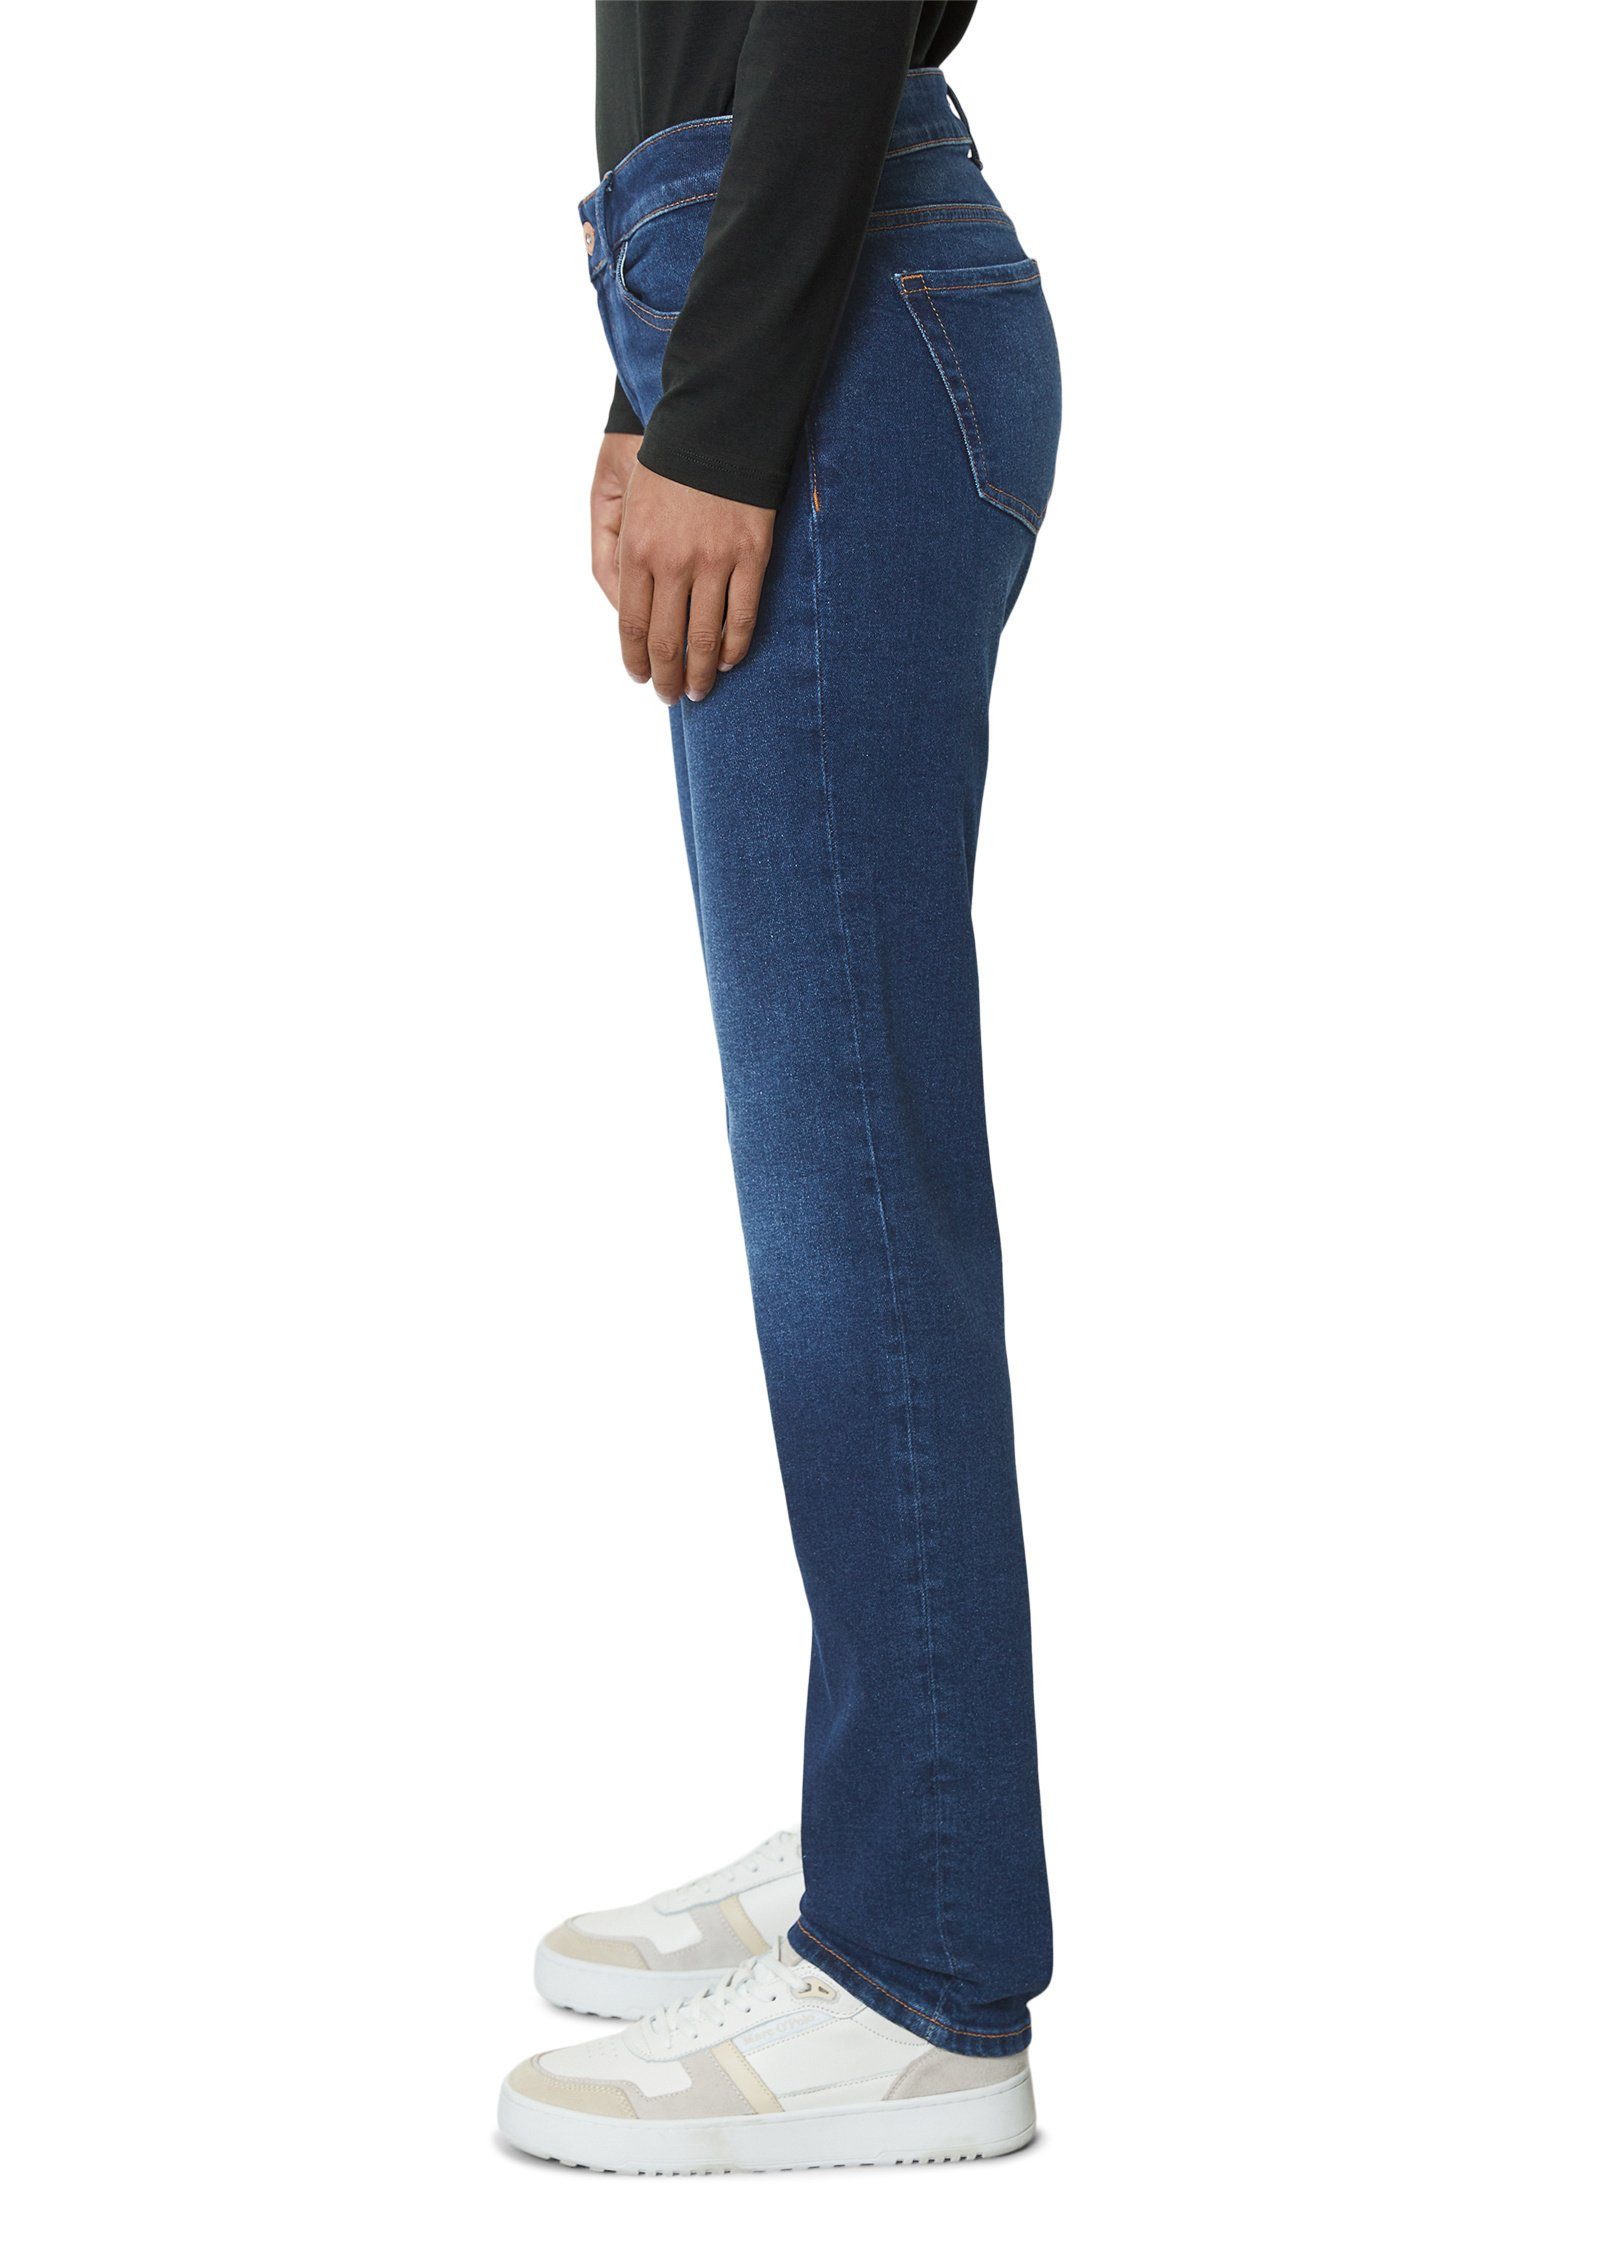 Marc O'Polo 5-Pocket-Jeans Stretch Organic blau aus Cotton